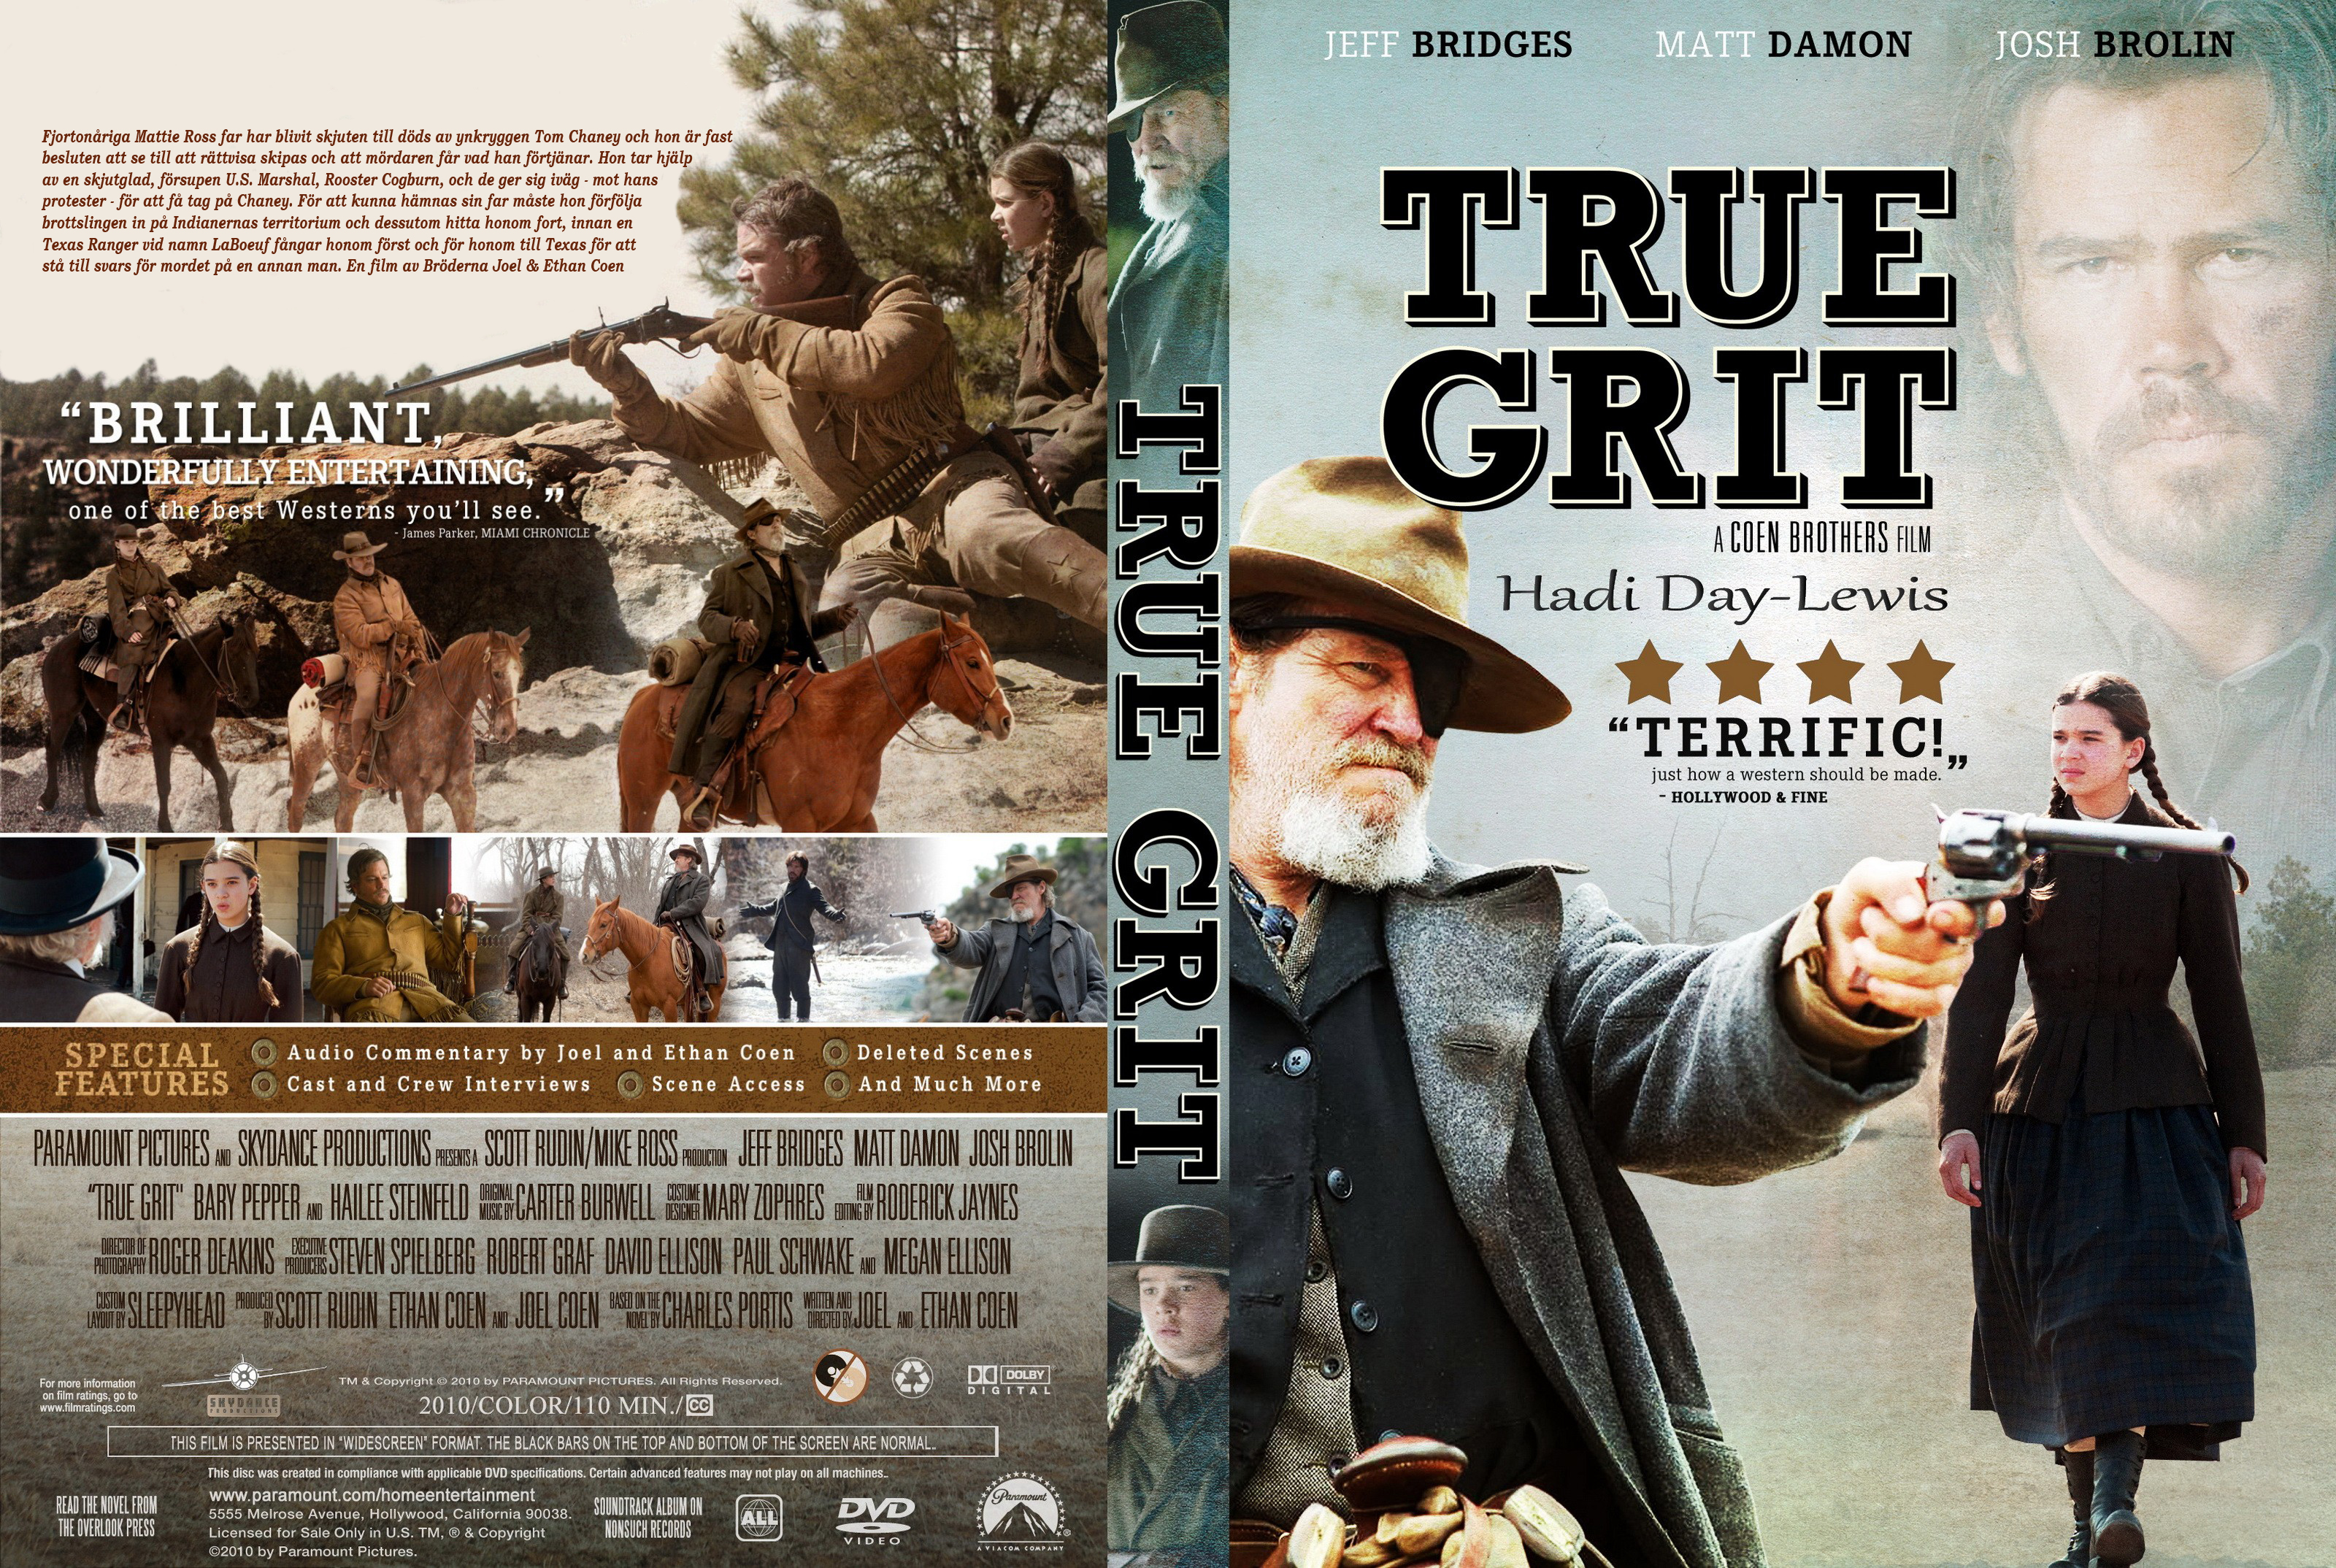 True grit. True Grit 2010 DVD Cover. Железная хватка (2010). Джош Бролин железная хватка. Джефф Бриджес железная хватка.